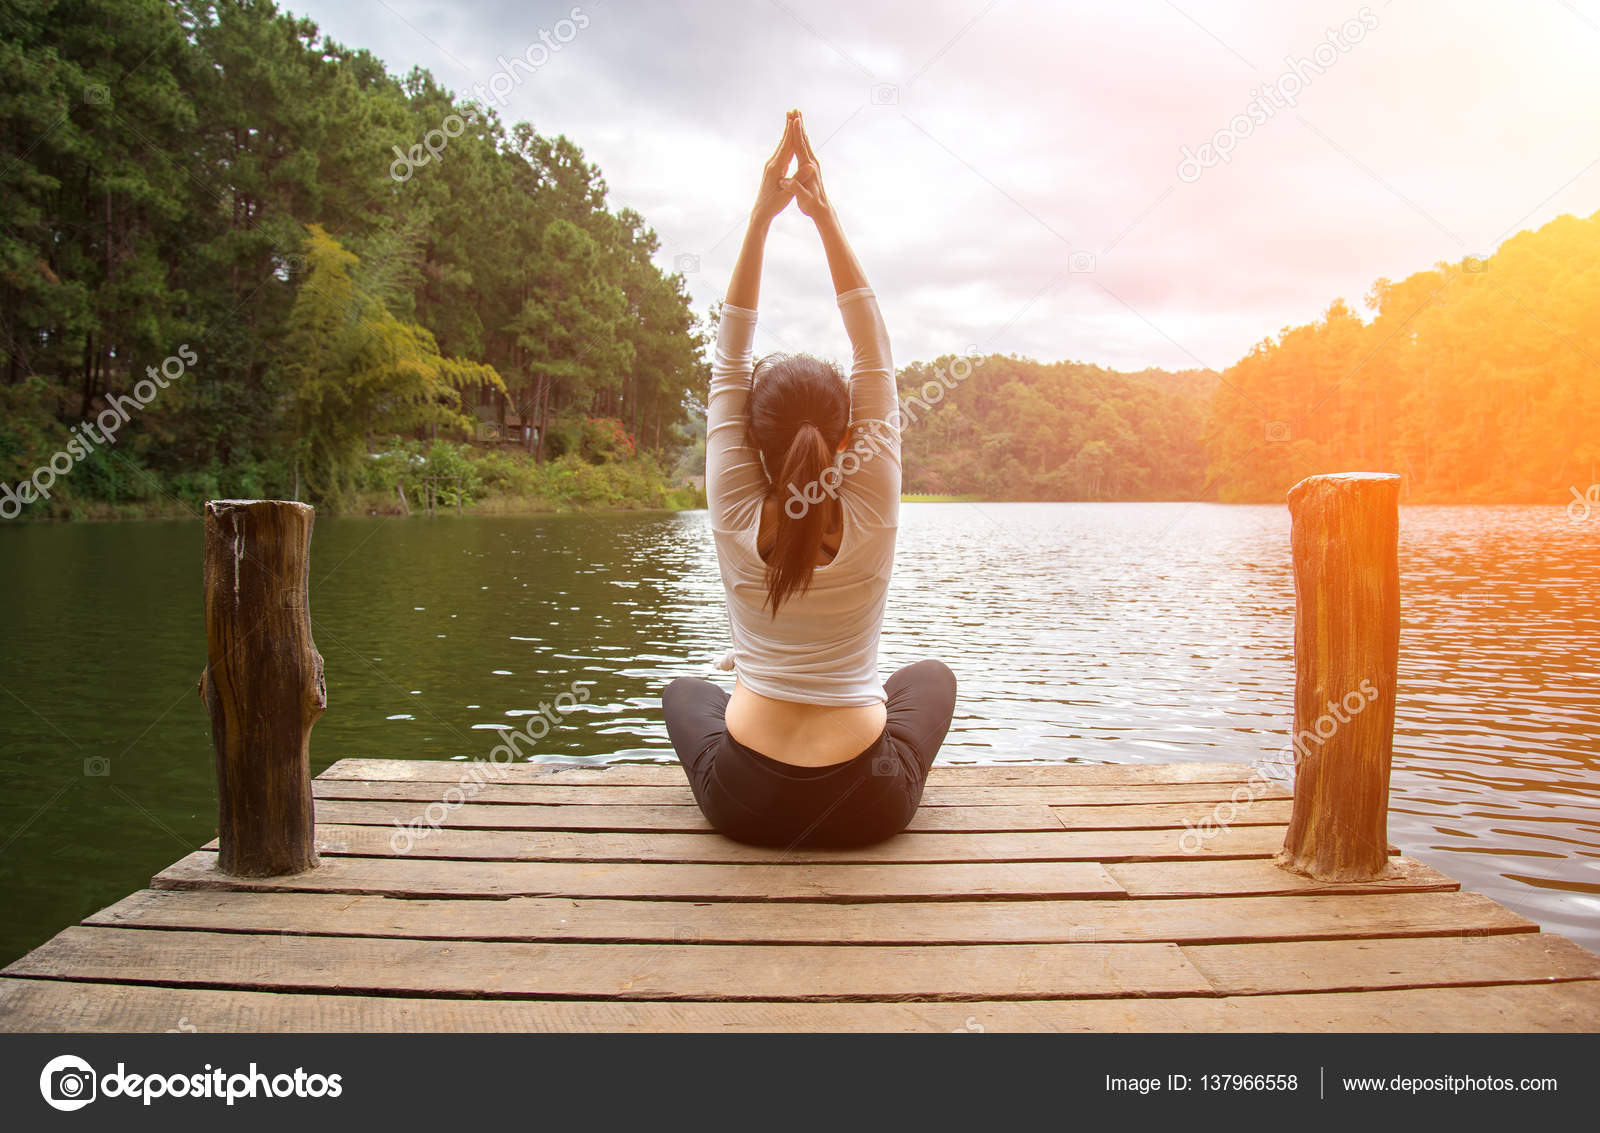 https://st3.depositphotos.com/6583218/13796/i/1600/depositphotos_137966558-stock-photo-woman-do-yoga-outdoor-woman.jpg